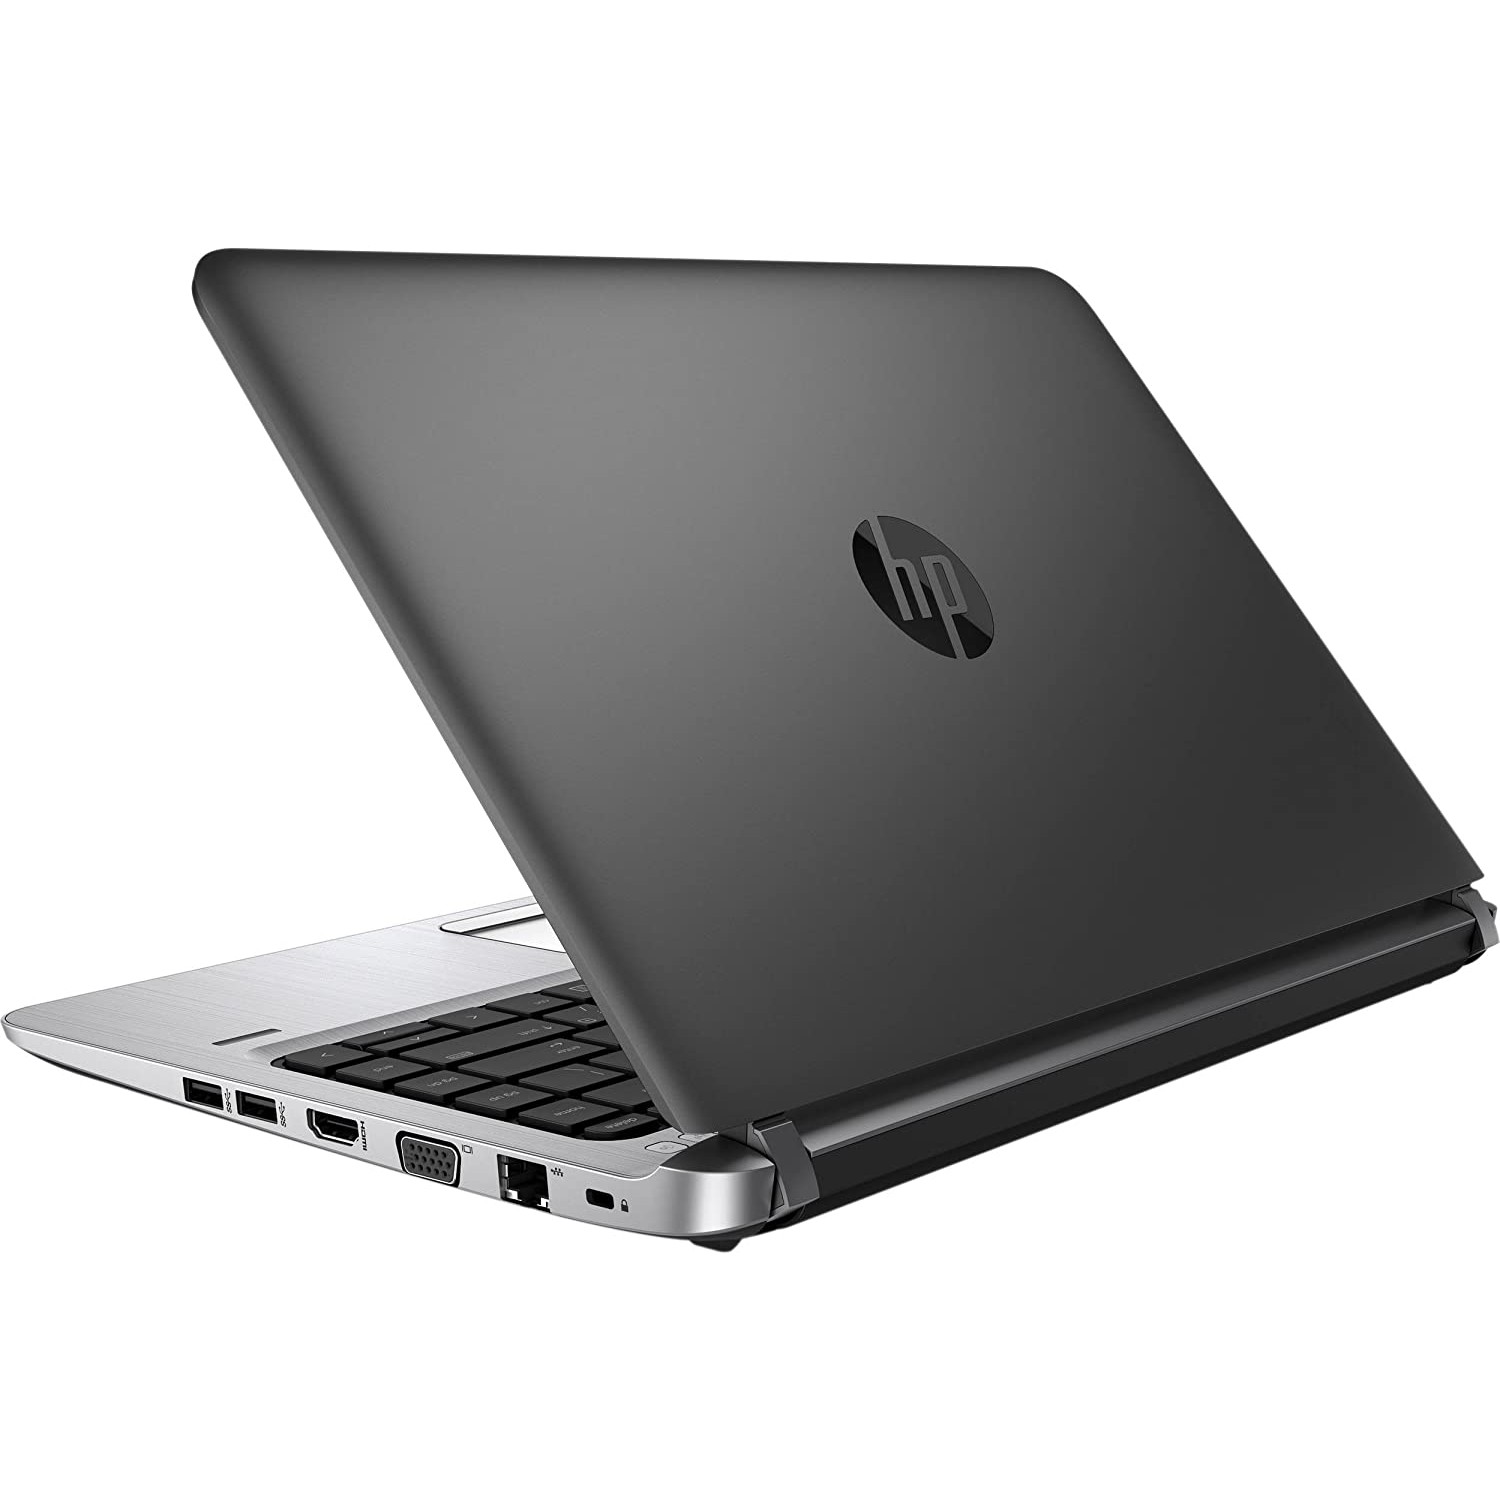 HP ProBook 430 G3 ( used, i5 6Gen, 256SSD, 8G Ram, touch screen)